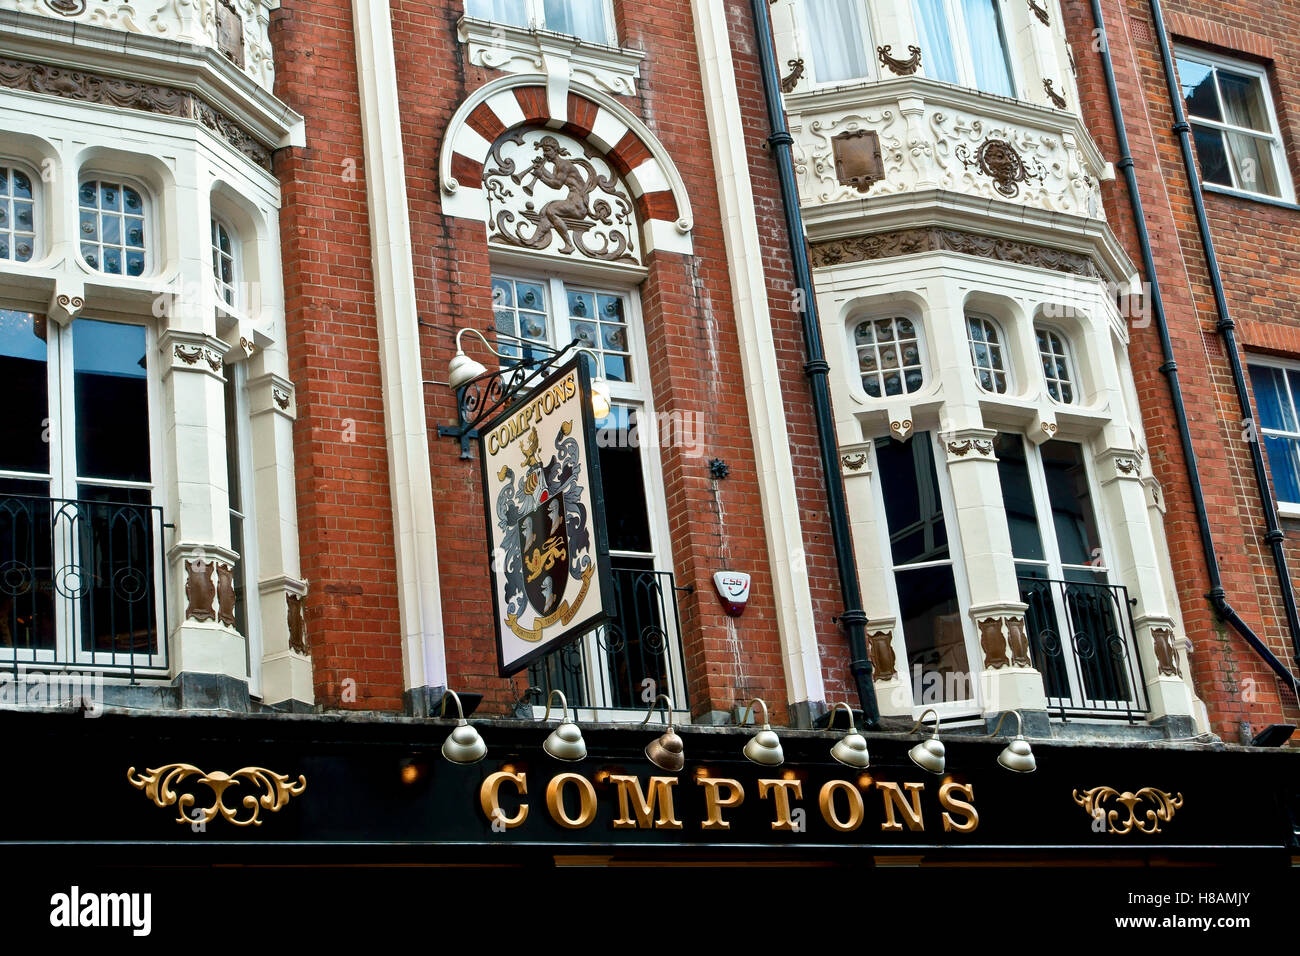 Comptons Pub, Gay Pub, Old Compton Street, im Herzen von Soho's Gay Village, London, England, Großbritannien, Großbritannien, Großbritannien, Großbritannien, Europa. Stockfoto